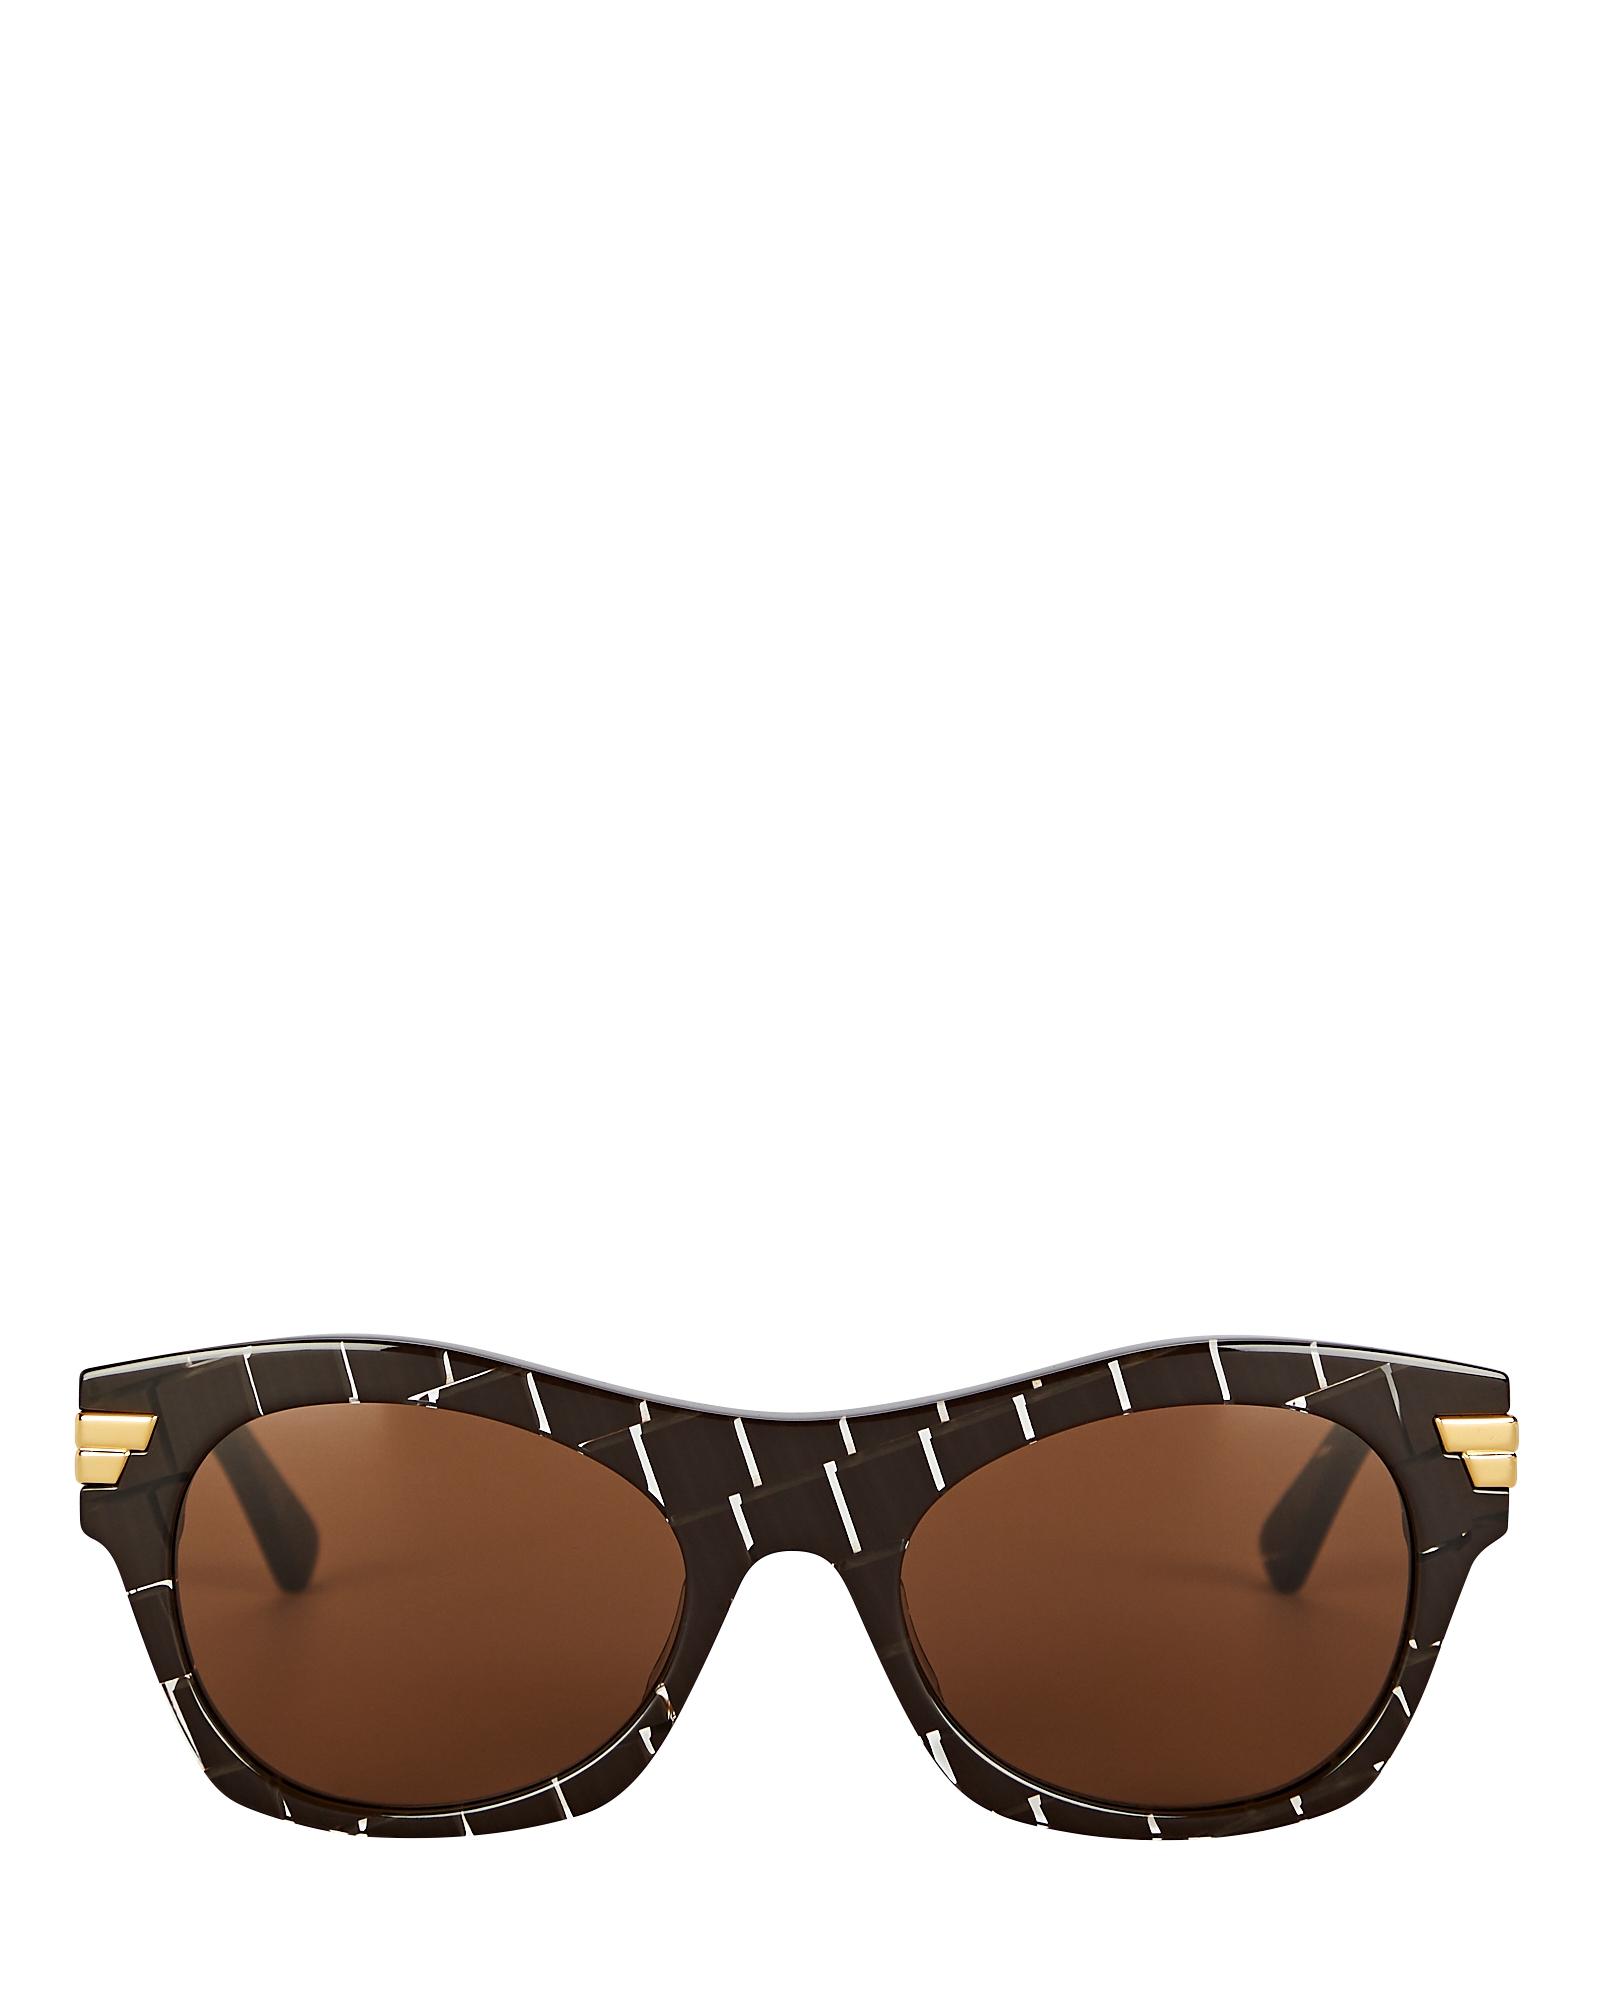 Bottega Veneta Intreccio Cat Eye Sunglasses | INTERMIX®